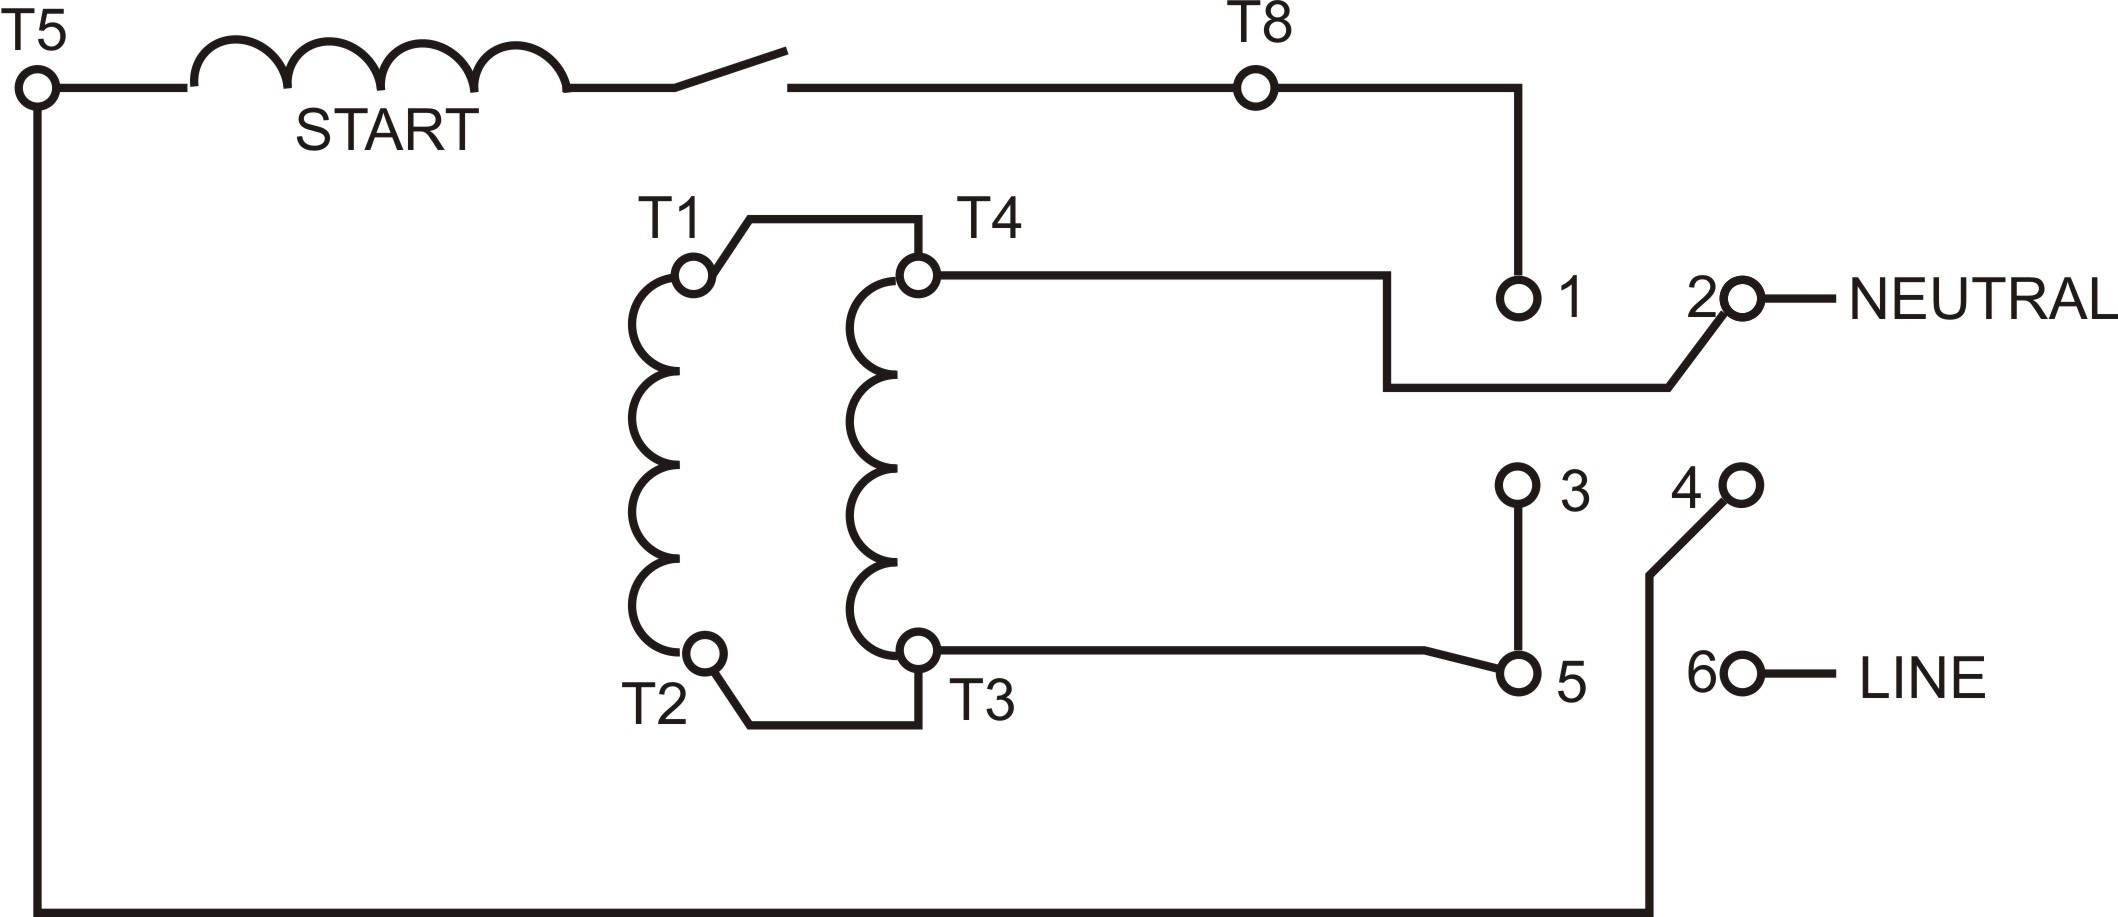 Doerr Lr22132 Wiring Diagram | Wiring Diagram - Doerr Electric Motor Lr22132 Wiring Diagram